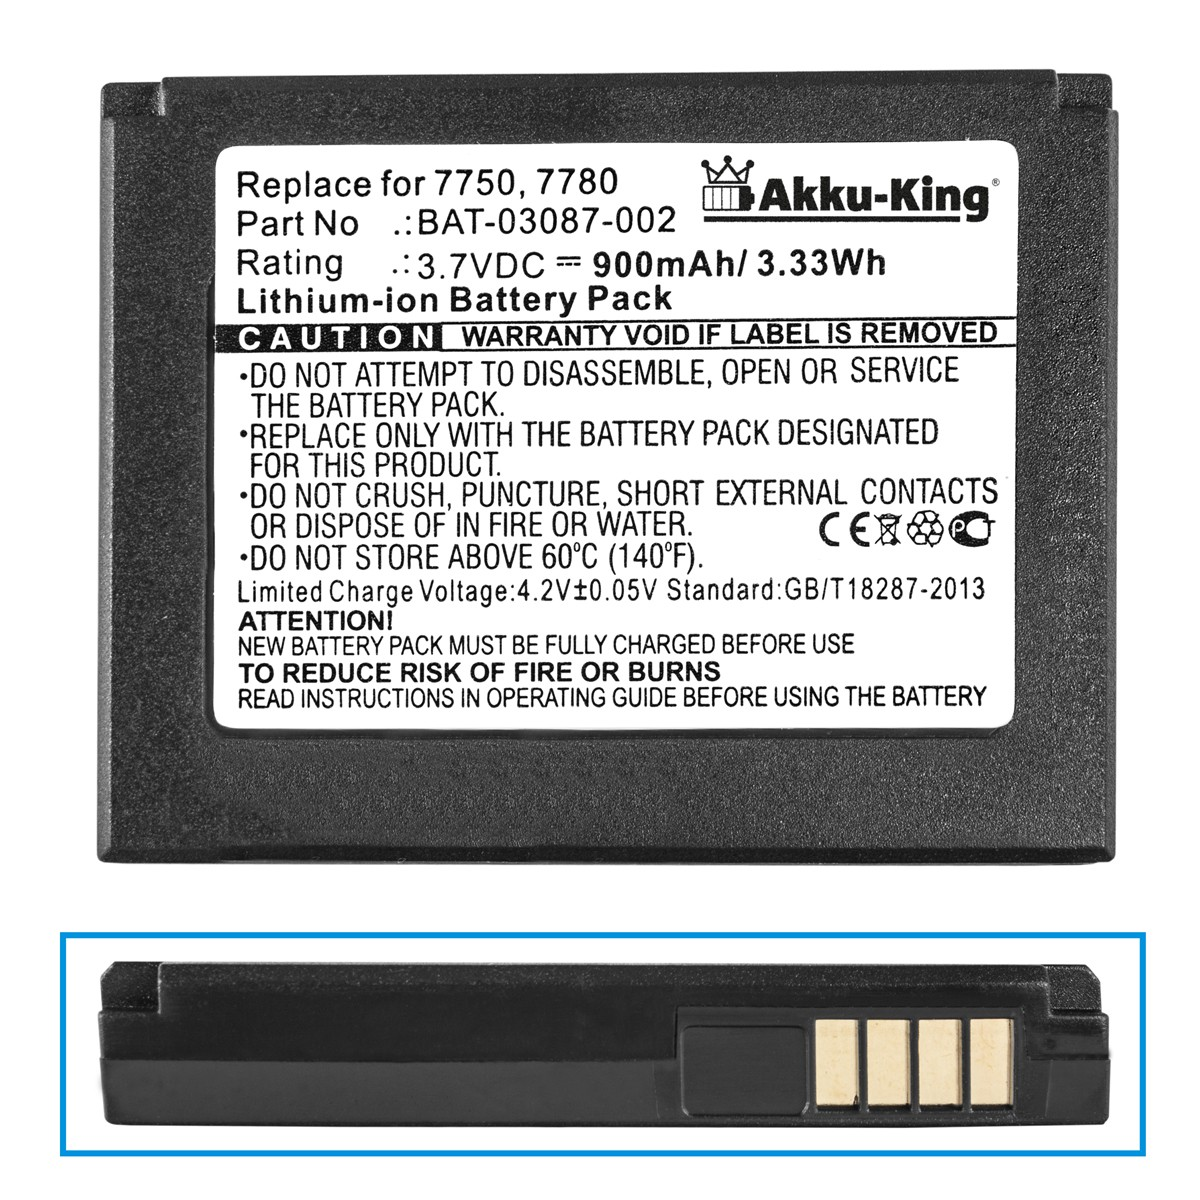 für Volt, 3.7 900mAh Li-Ion Handy-Akku, BAT-03087-001 Akku AKKU-KING Blackberry